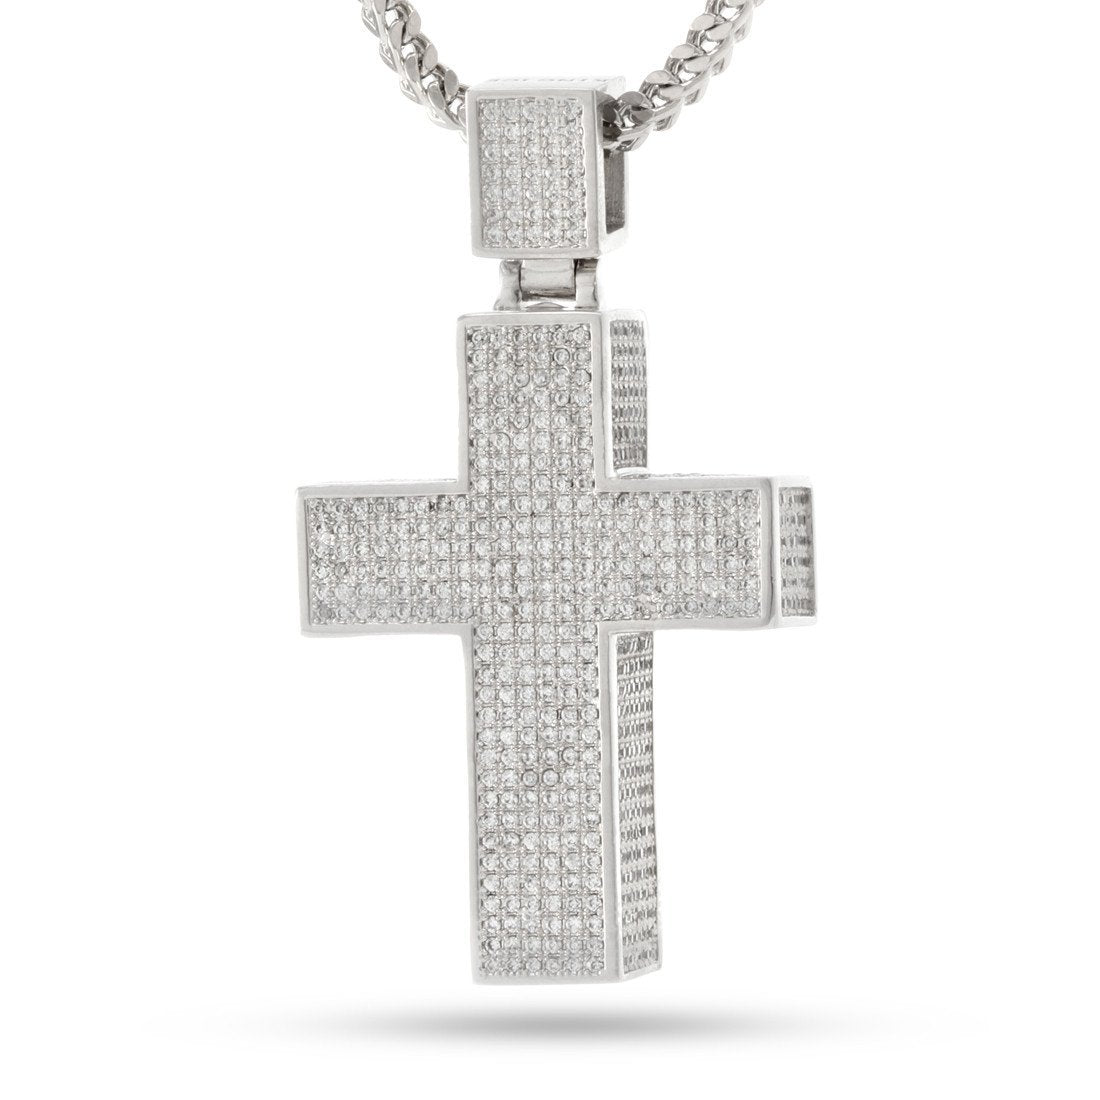 Stash Necklace Cross 